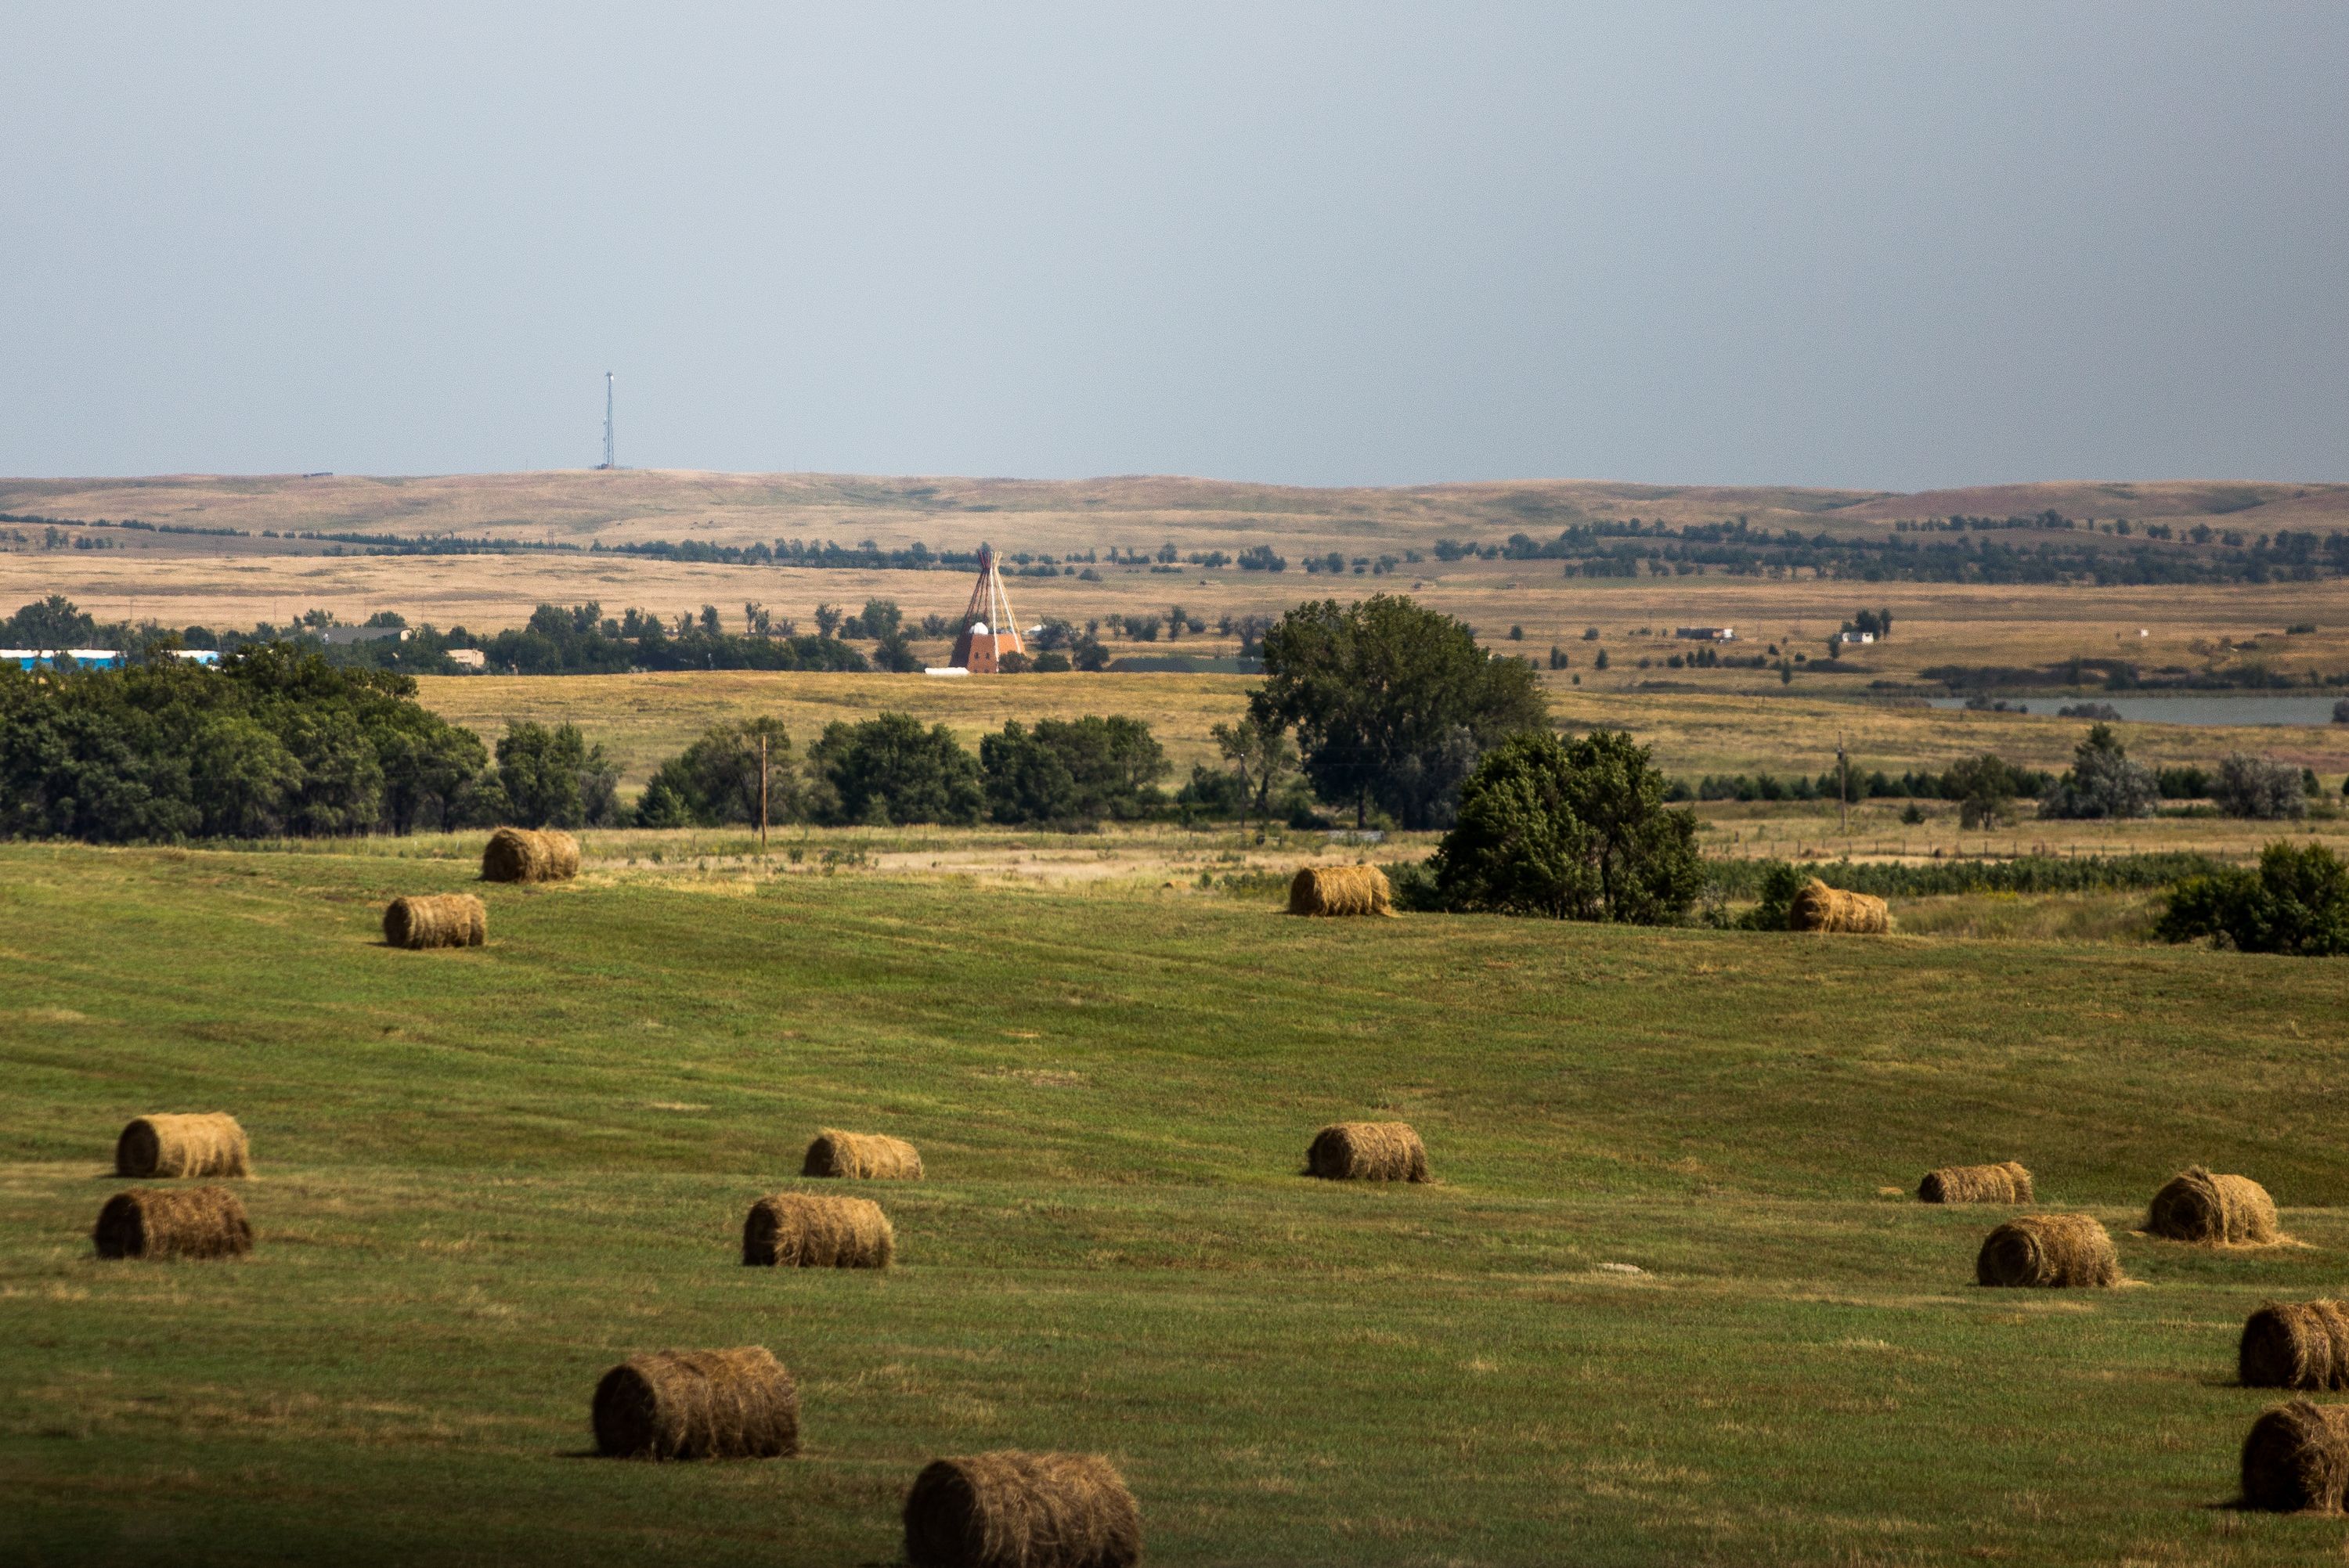 Sinte Gleska University sits on the backdrop of South Dakota's rolling plains on August 29, 2018, outside of Mission, South Dakota. Image by Brian Munoz. South Dakota, 2018.